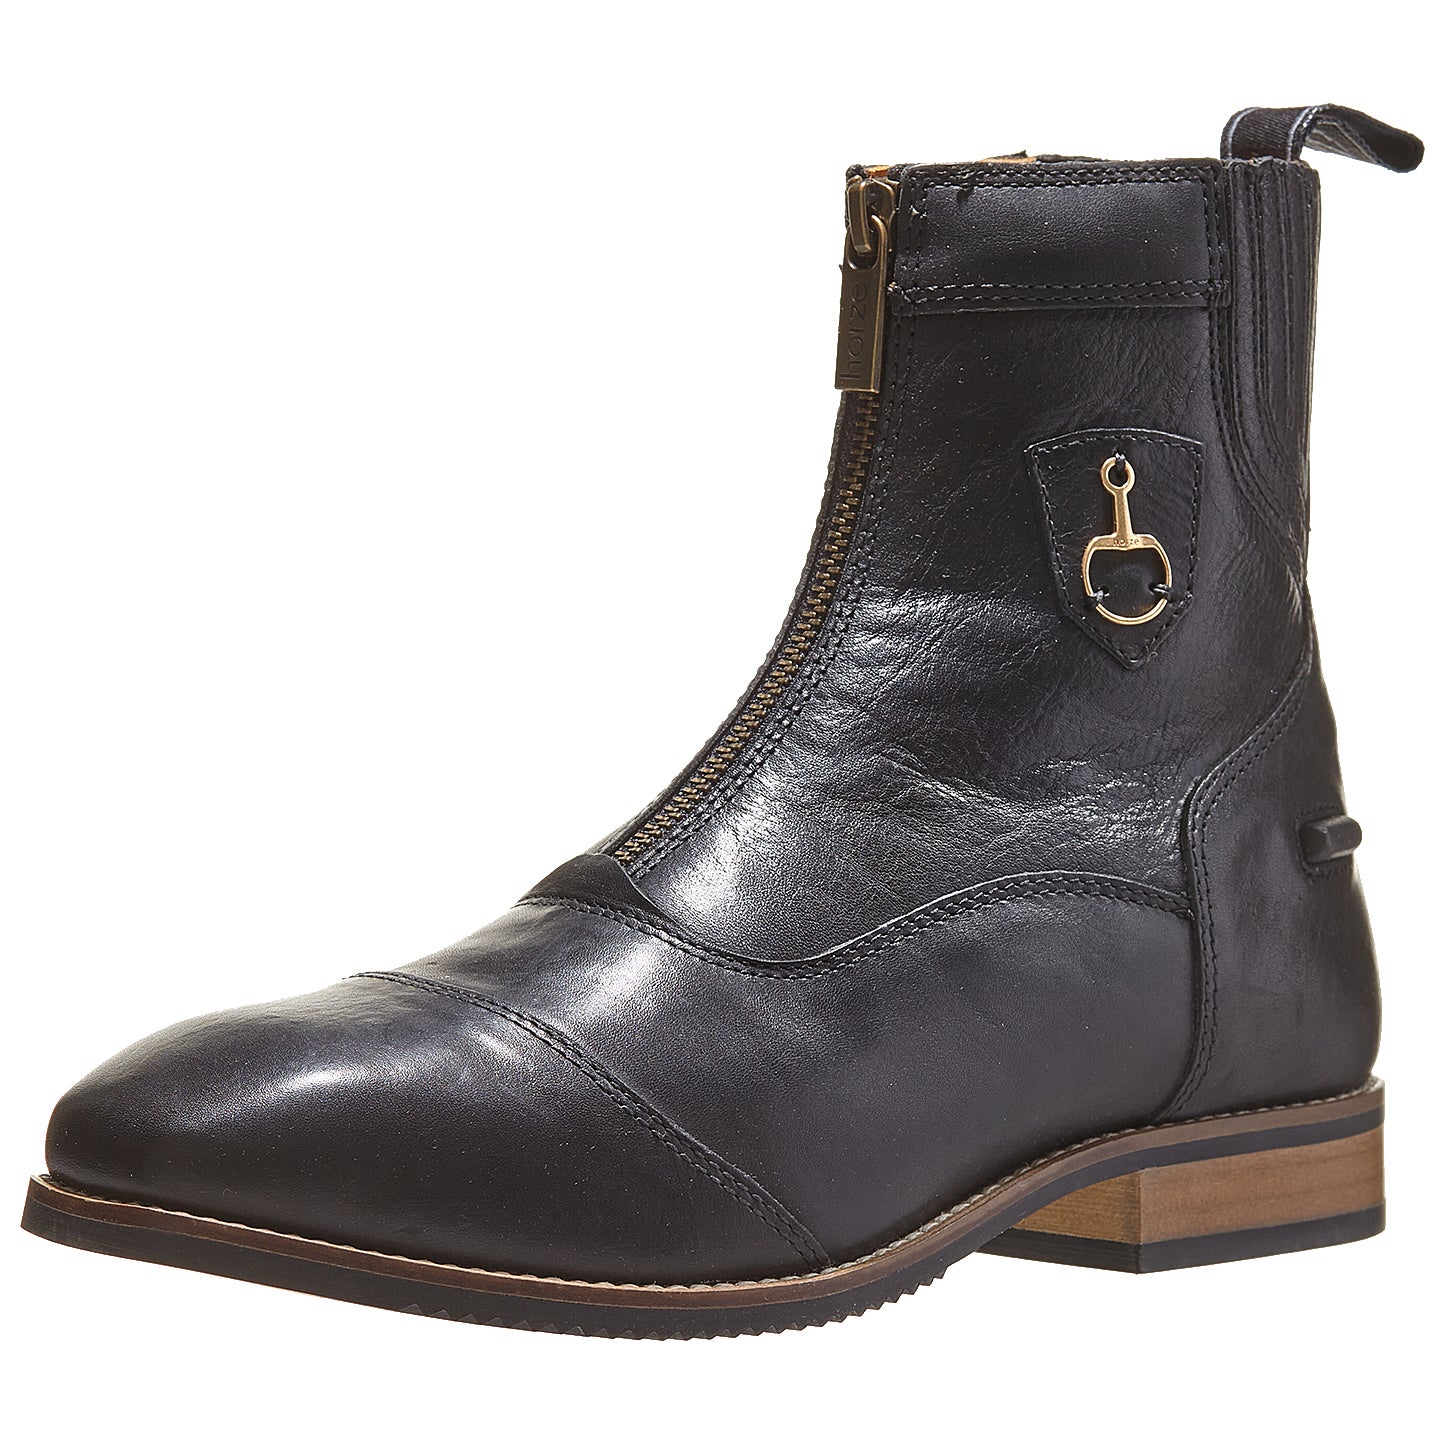 Horze Black Leather Leather Jodhpur Boots Zipper Front 